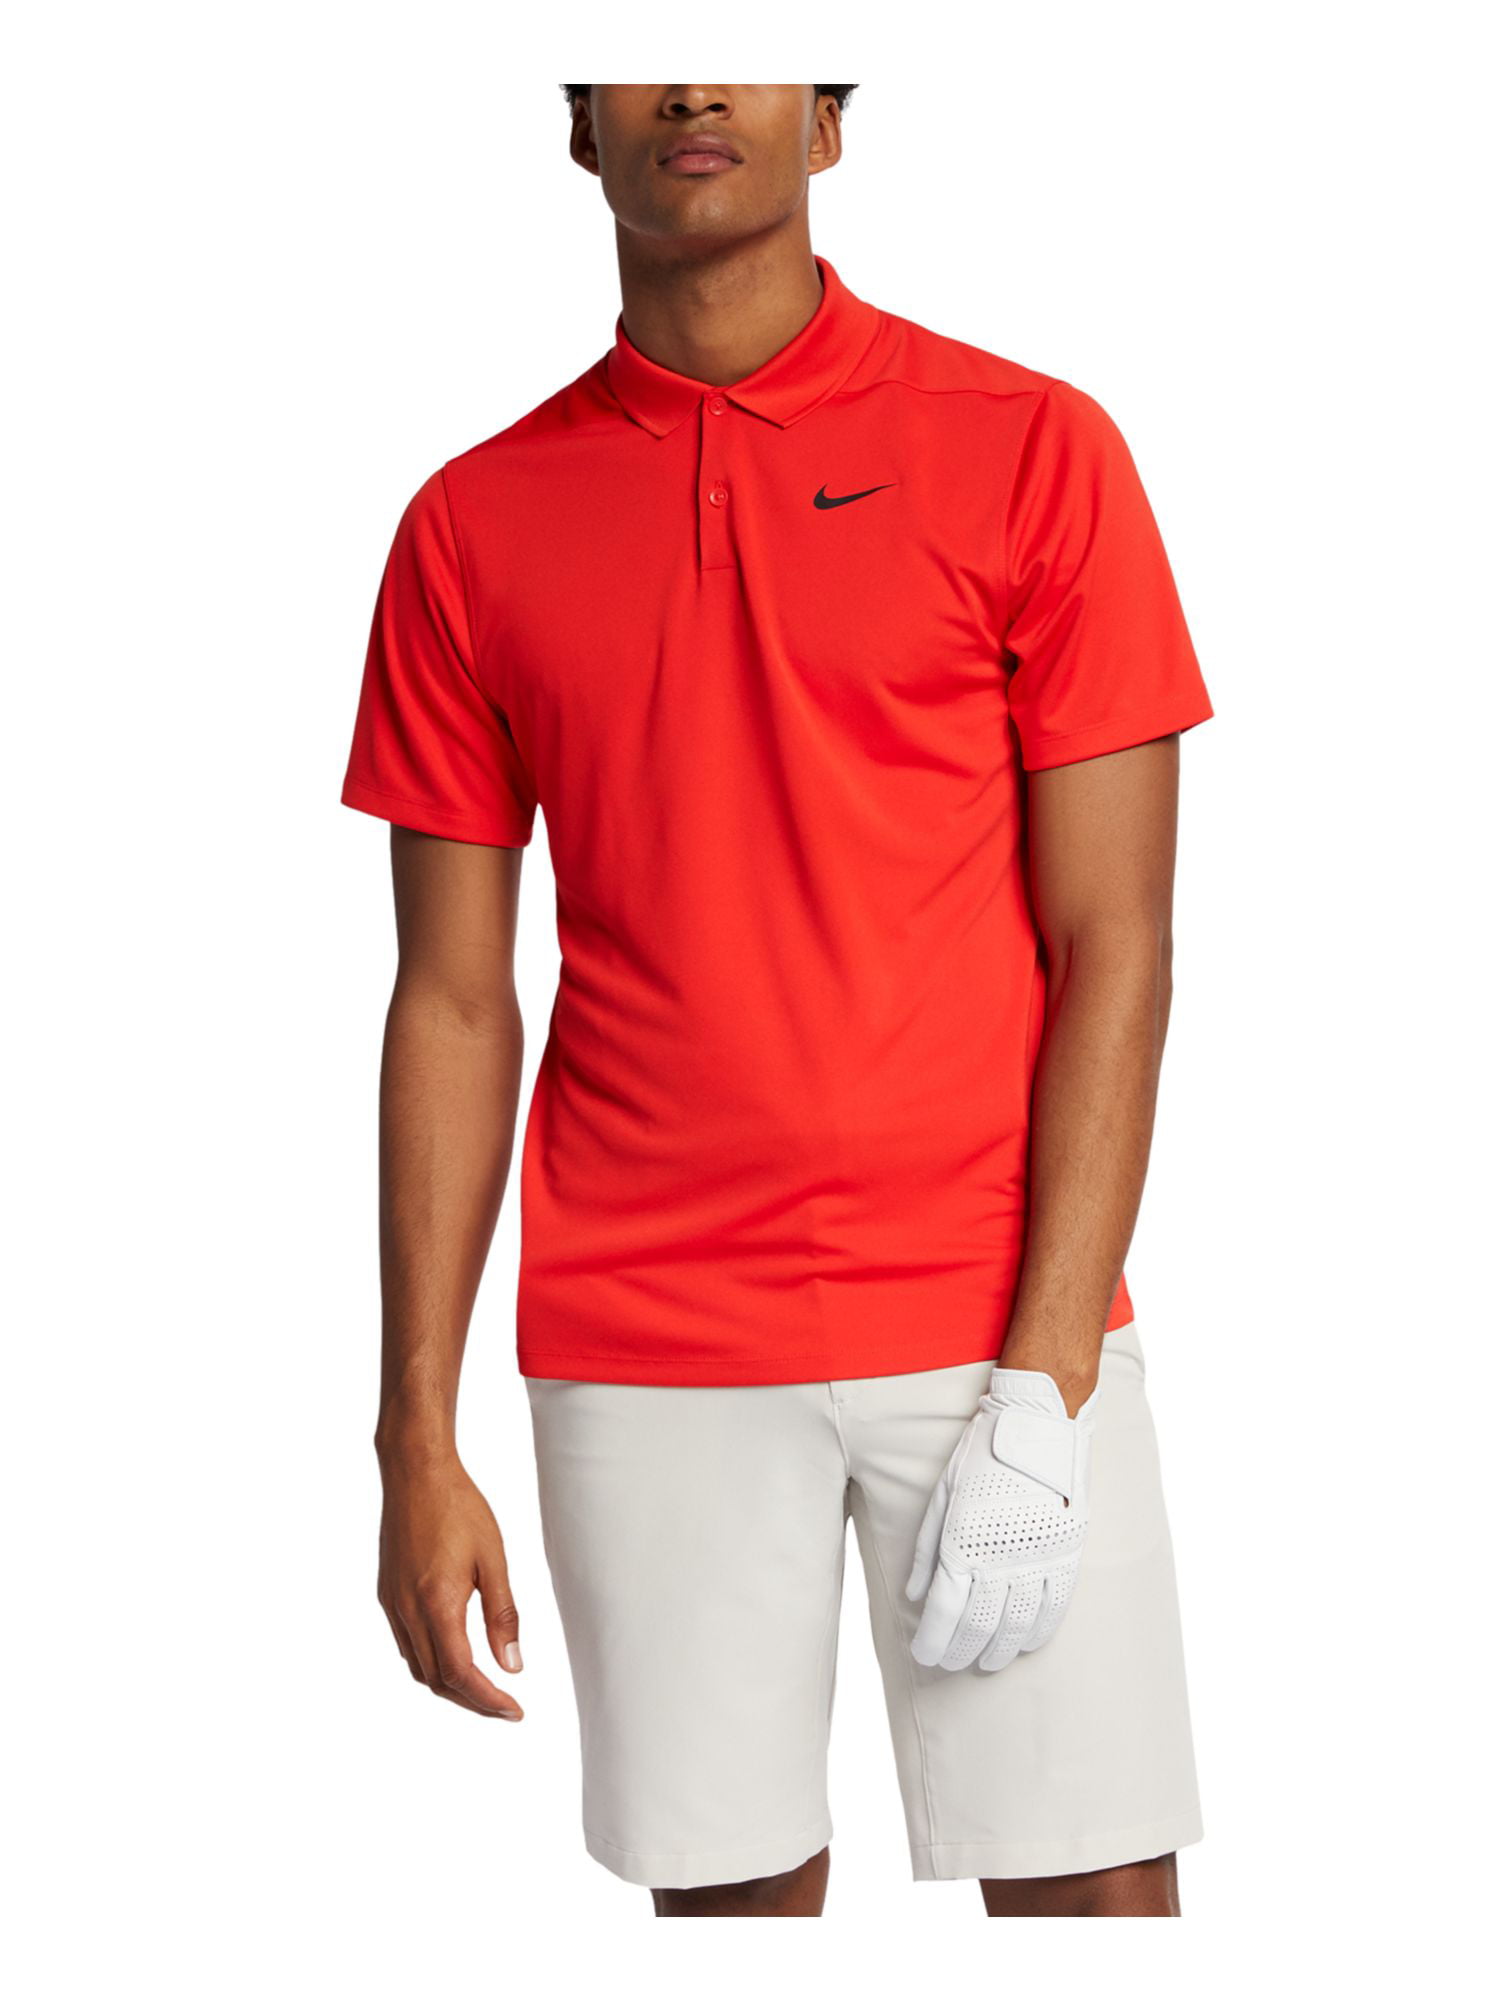 Nike - NIKE Mens Orange Solid Collared Polo Shirt Size: S - Walmart.com ...